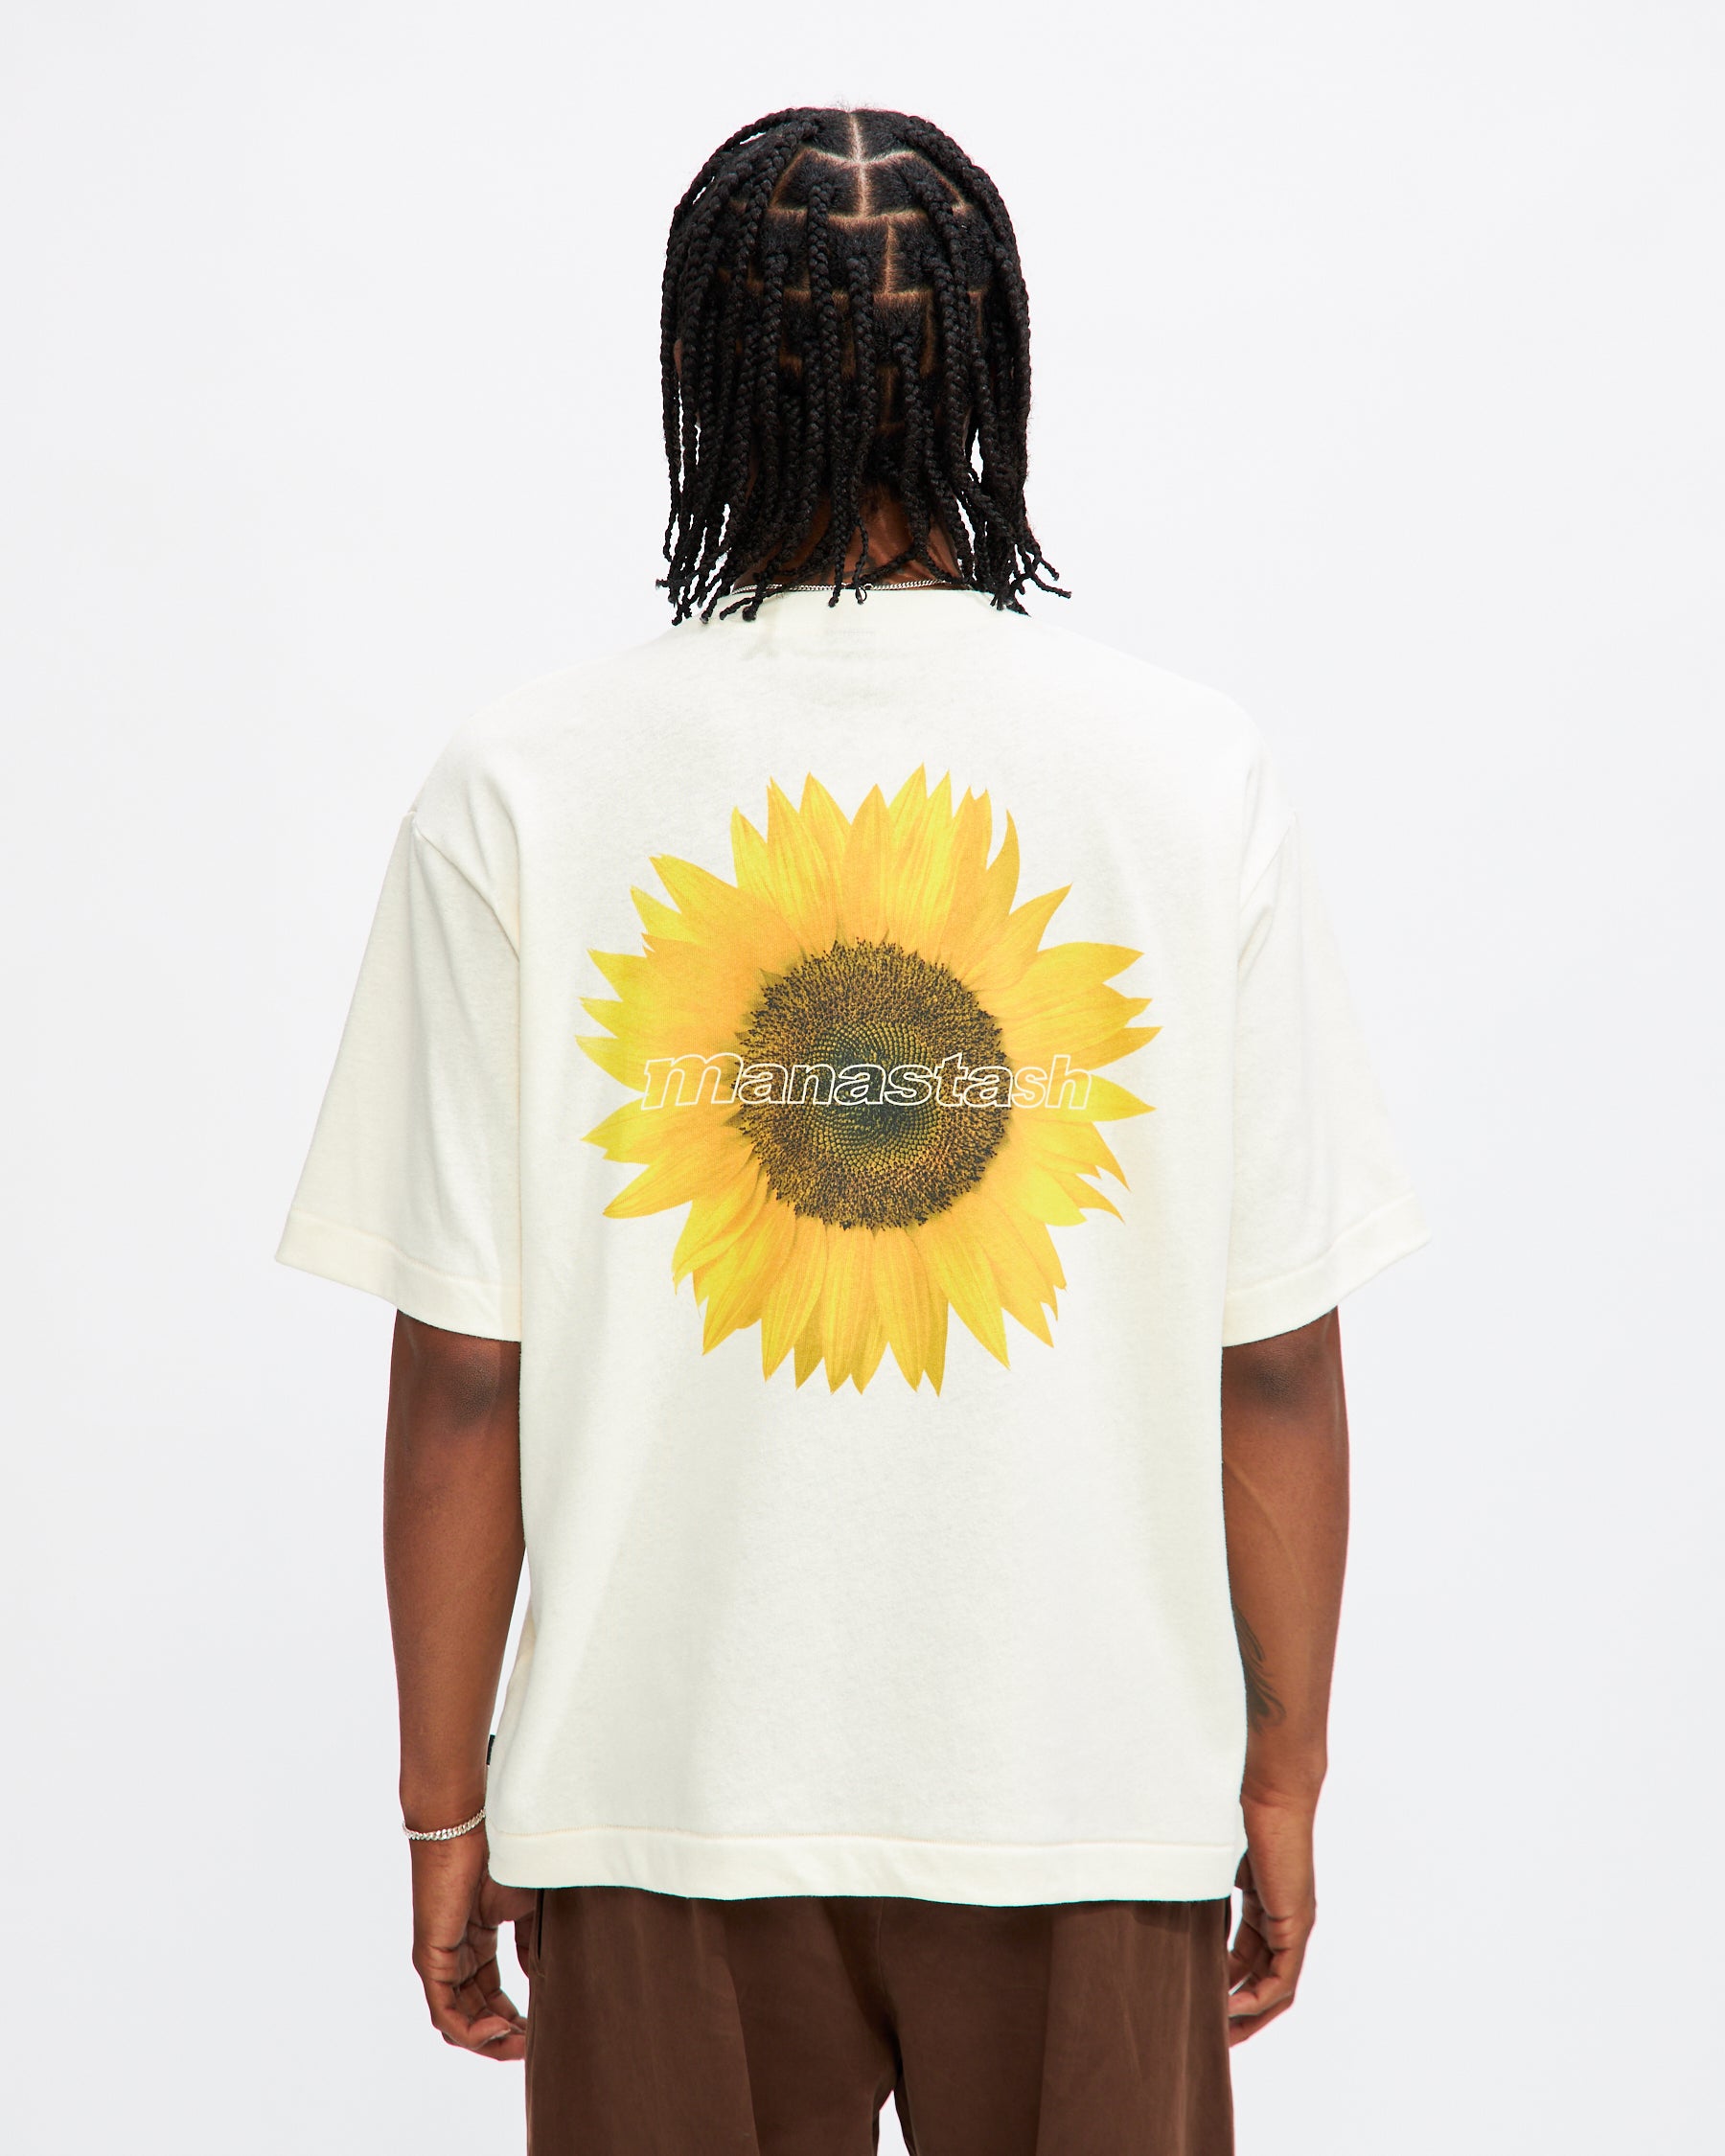 Hemp Tree Sun T-Shirt in Natural